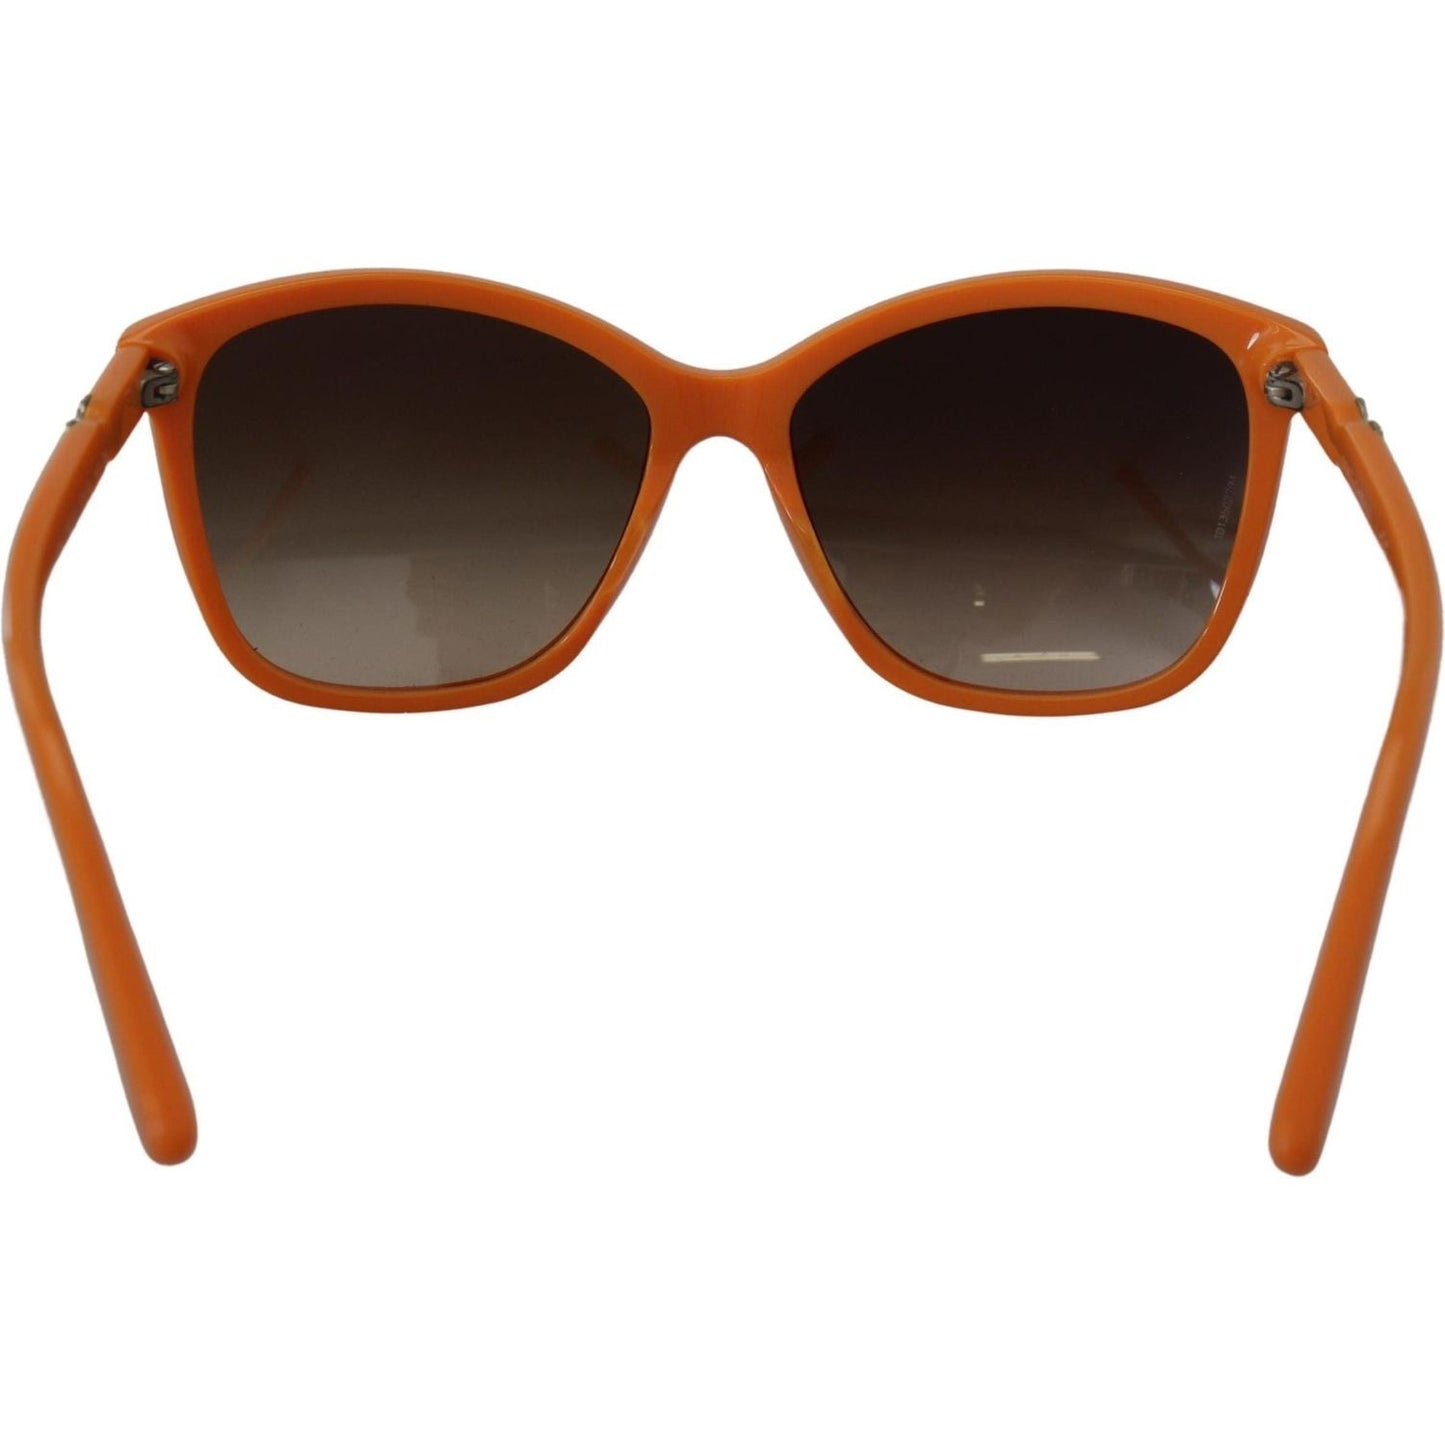 Dolce & Gabbana Chic Orange Round Sunglasses for Women orange-acetate-frame-round-shades-dg4170pm-sunglasses IMG_4511-1-scaled-41768f31-e2b.jpg